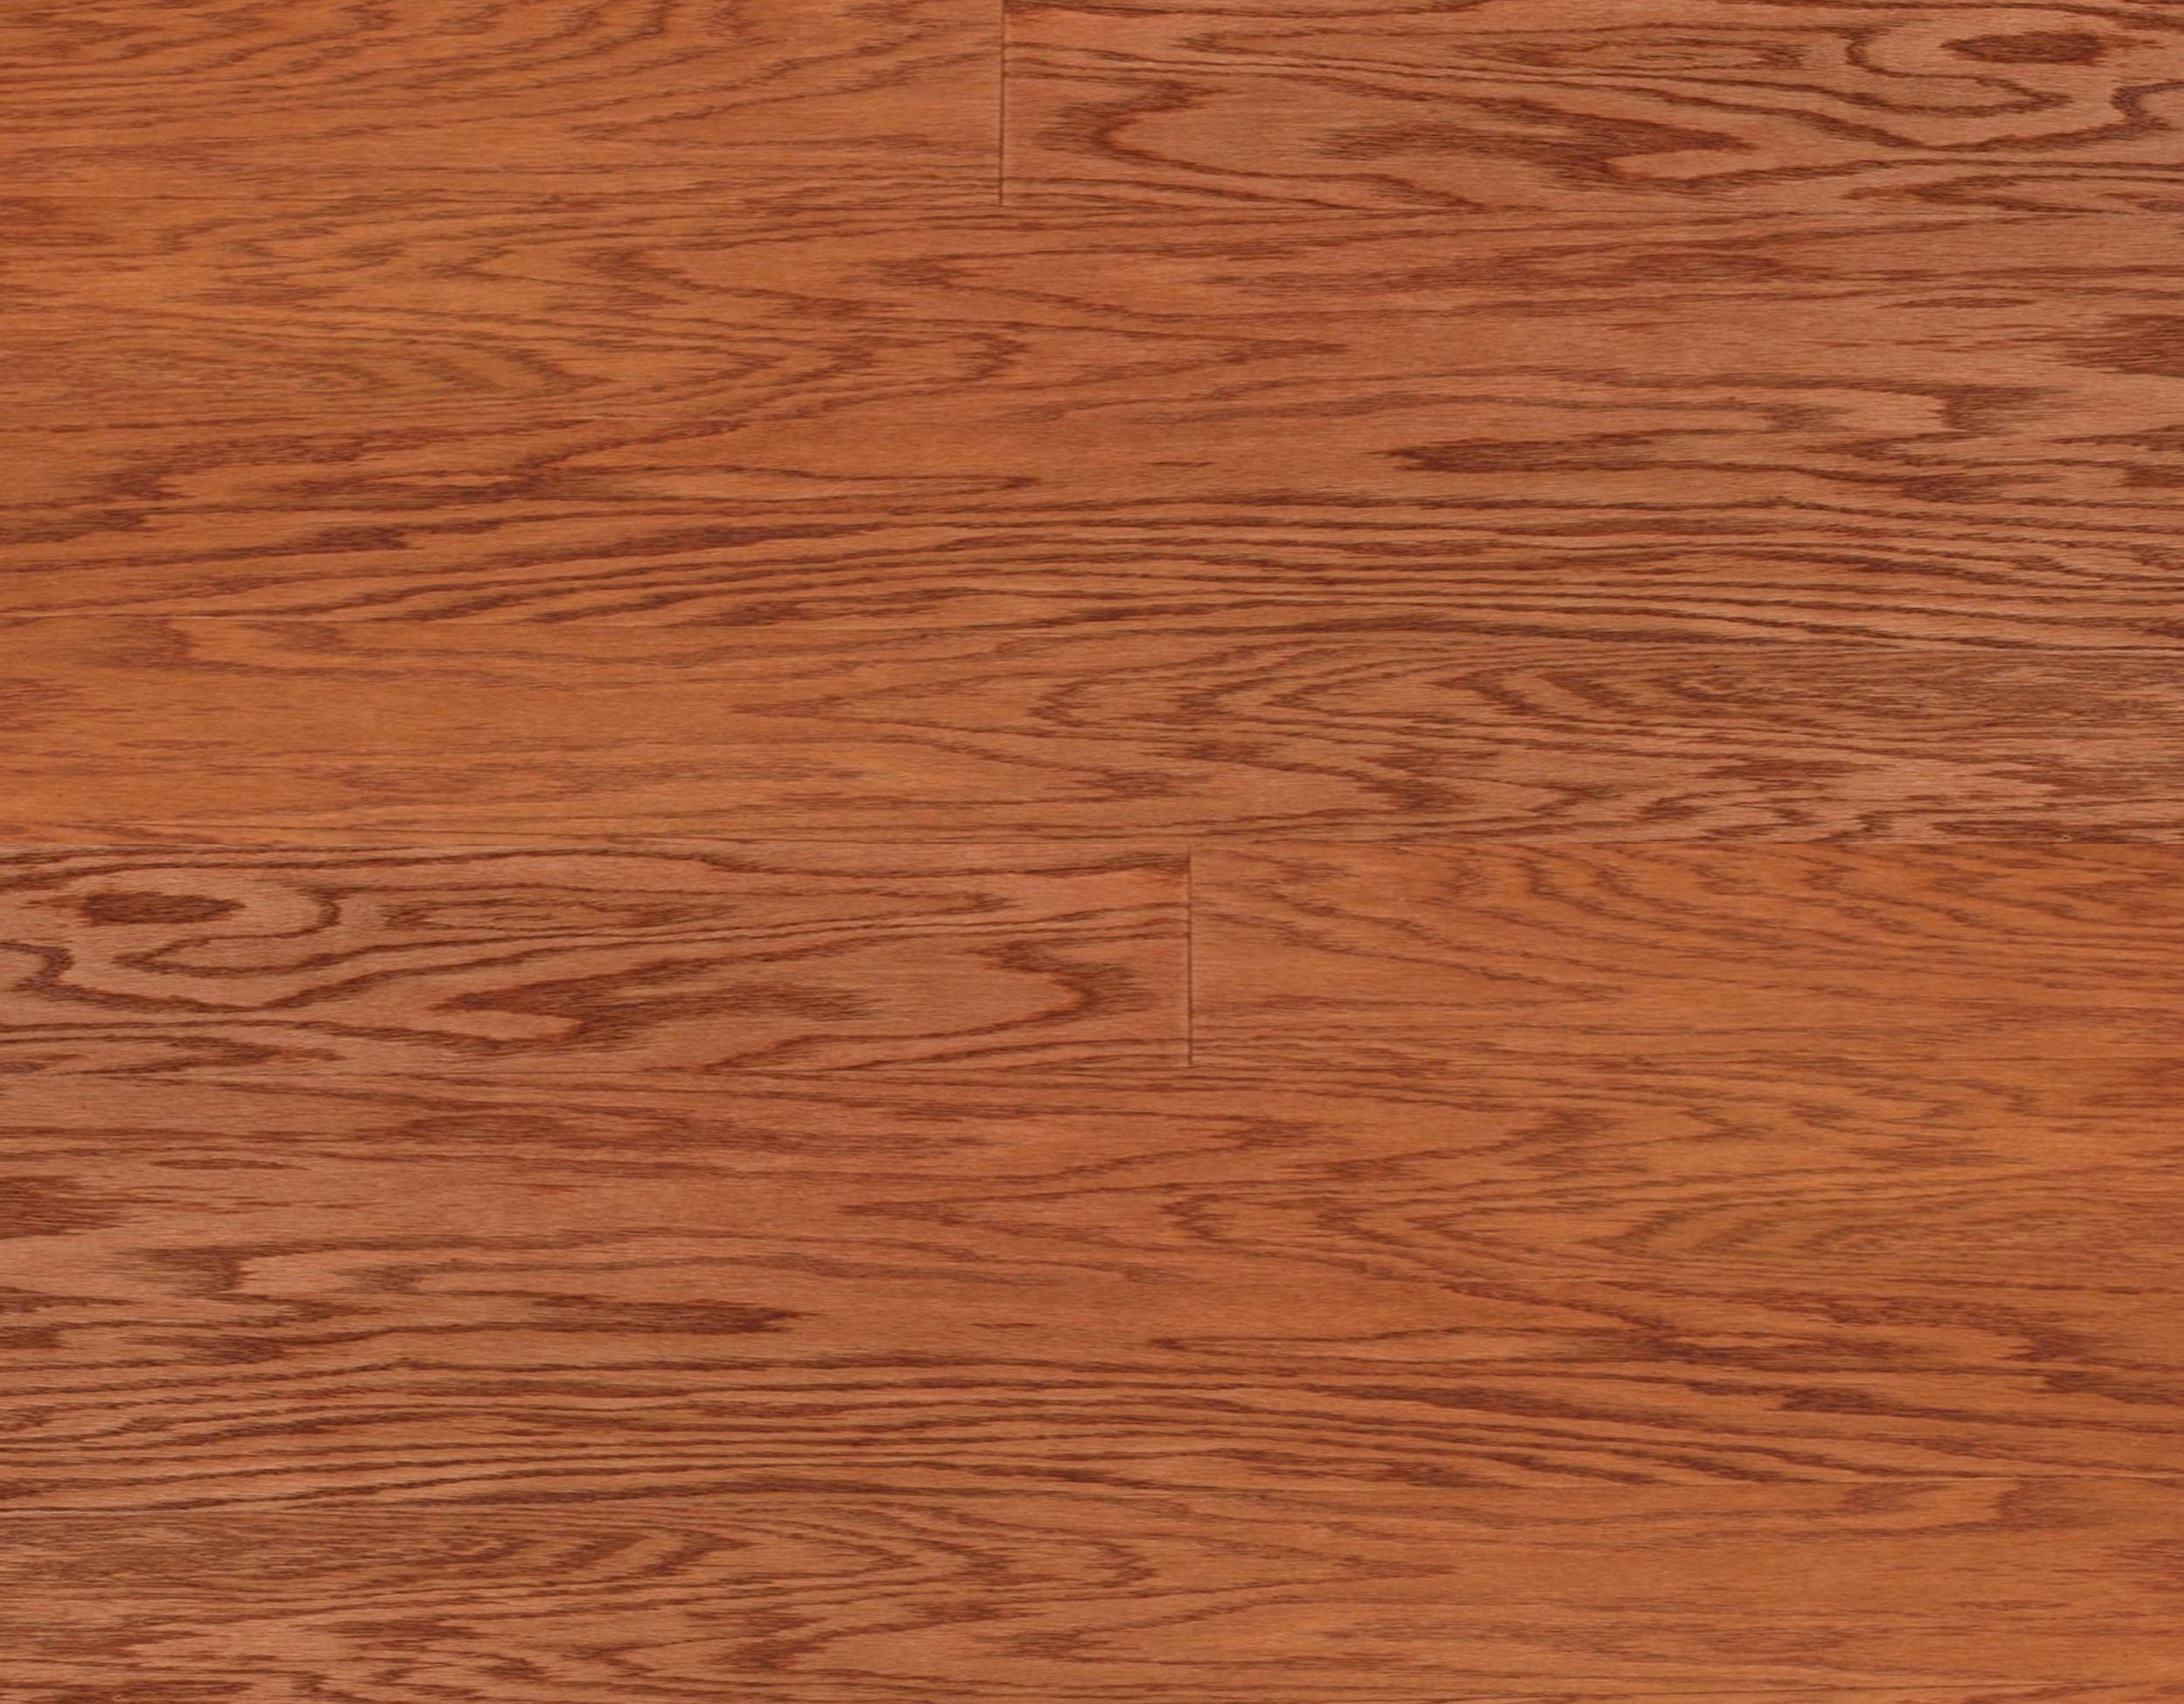 Northern Exotics Erscotch Red Oak, Discontinued Engineered Hardwood Flooring